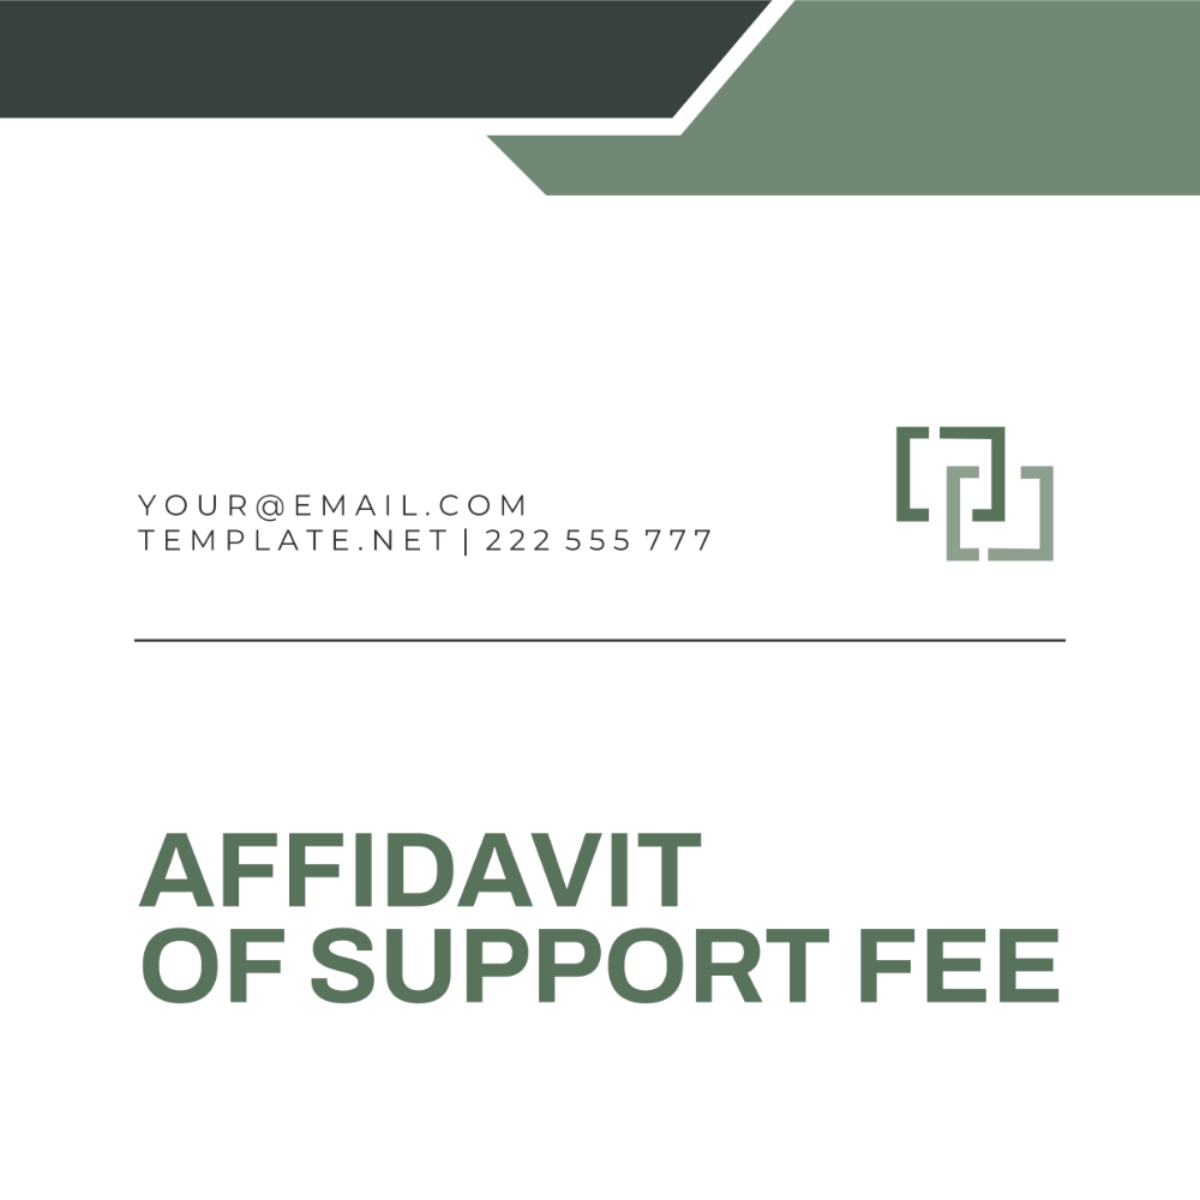 Affidavit of Support Fee Template